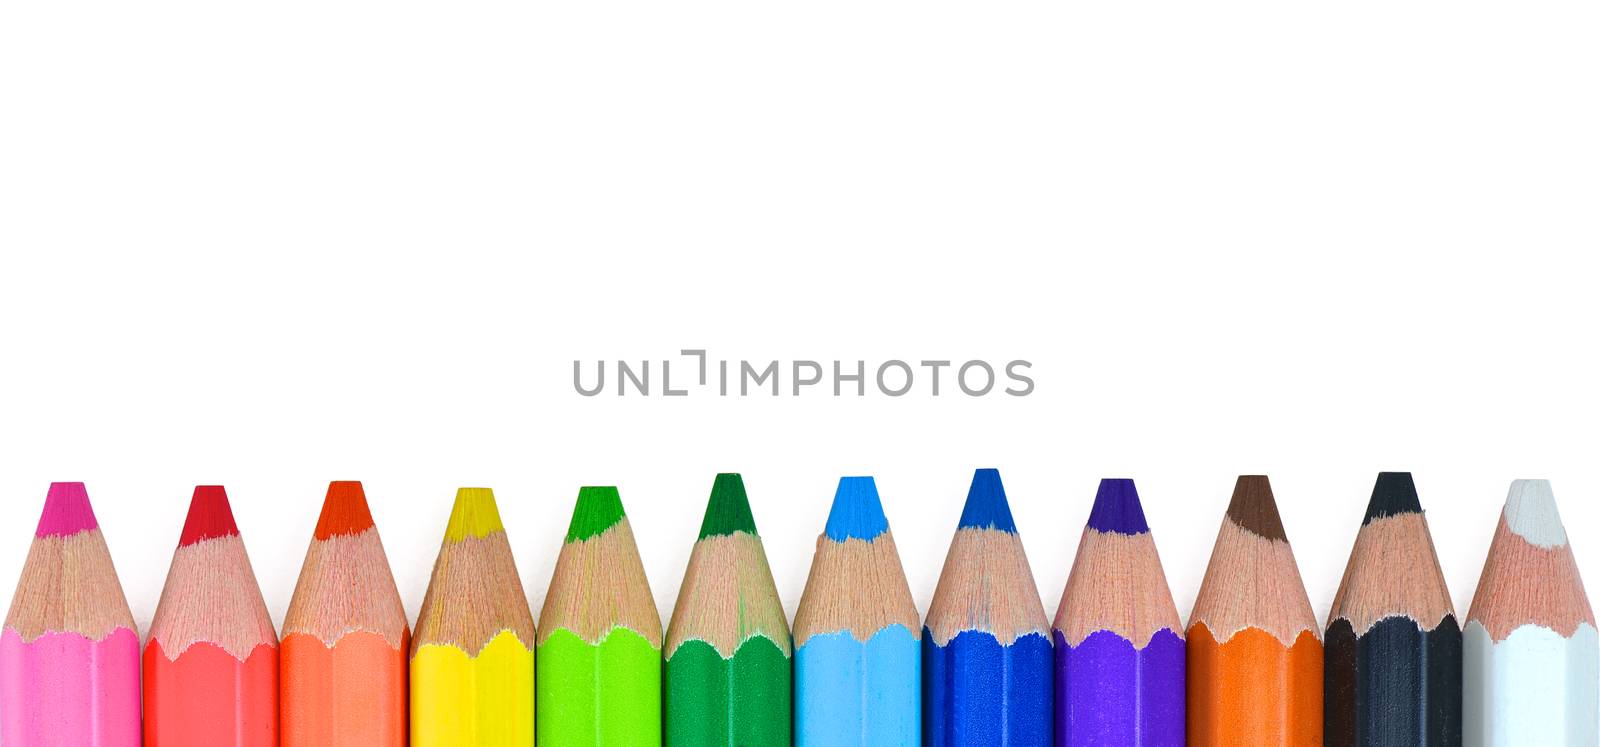 Colored Pencils by antpkr